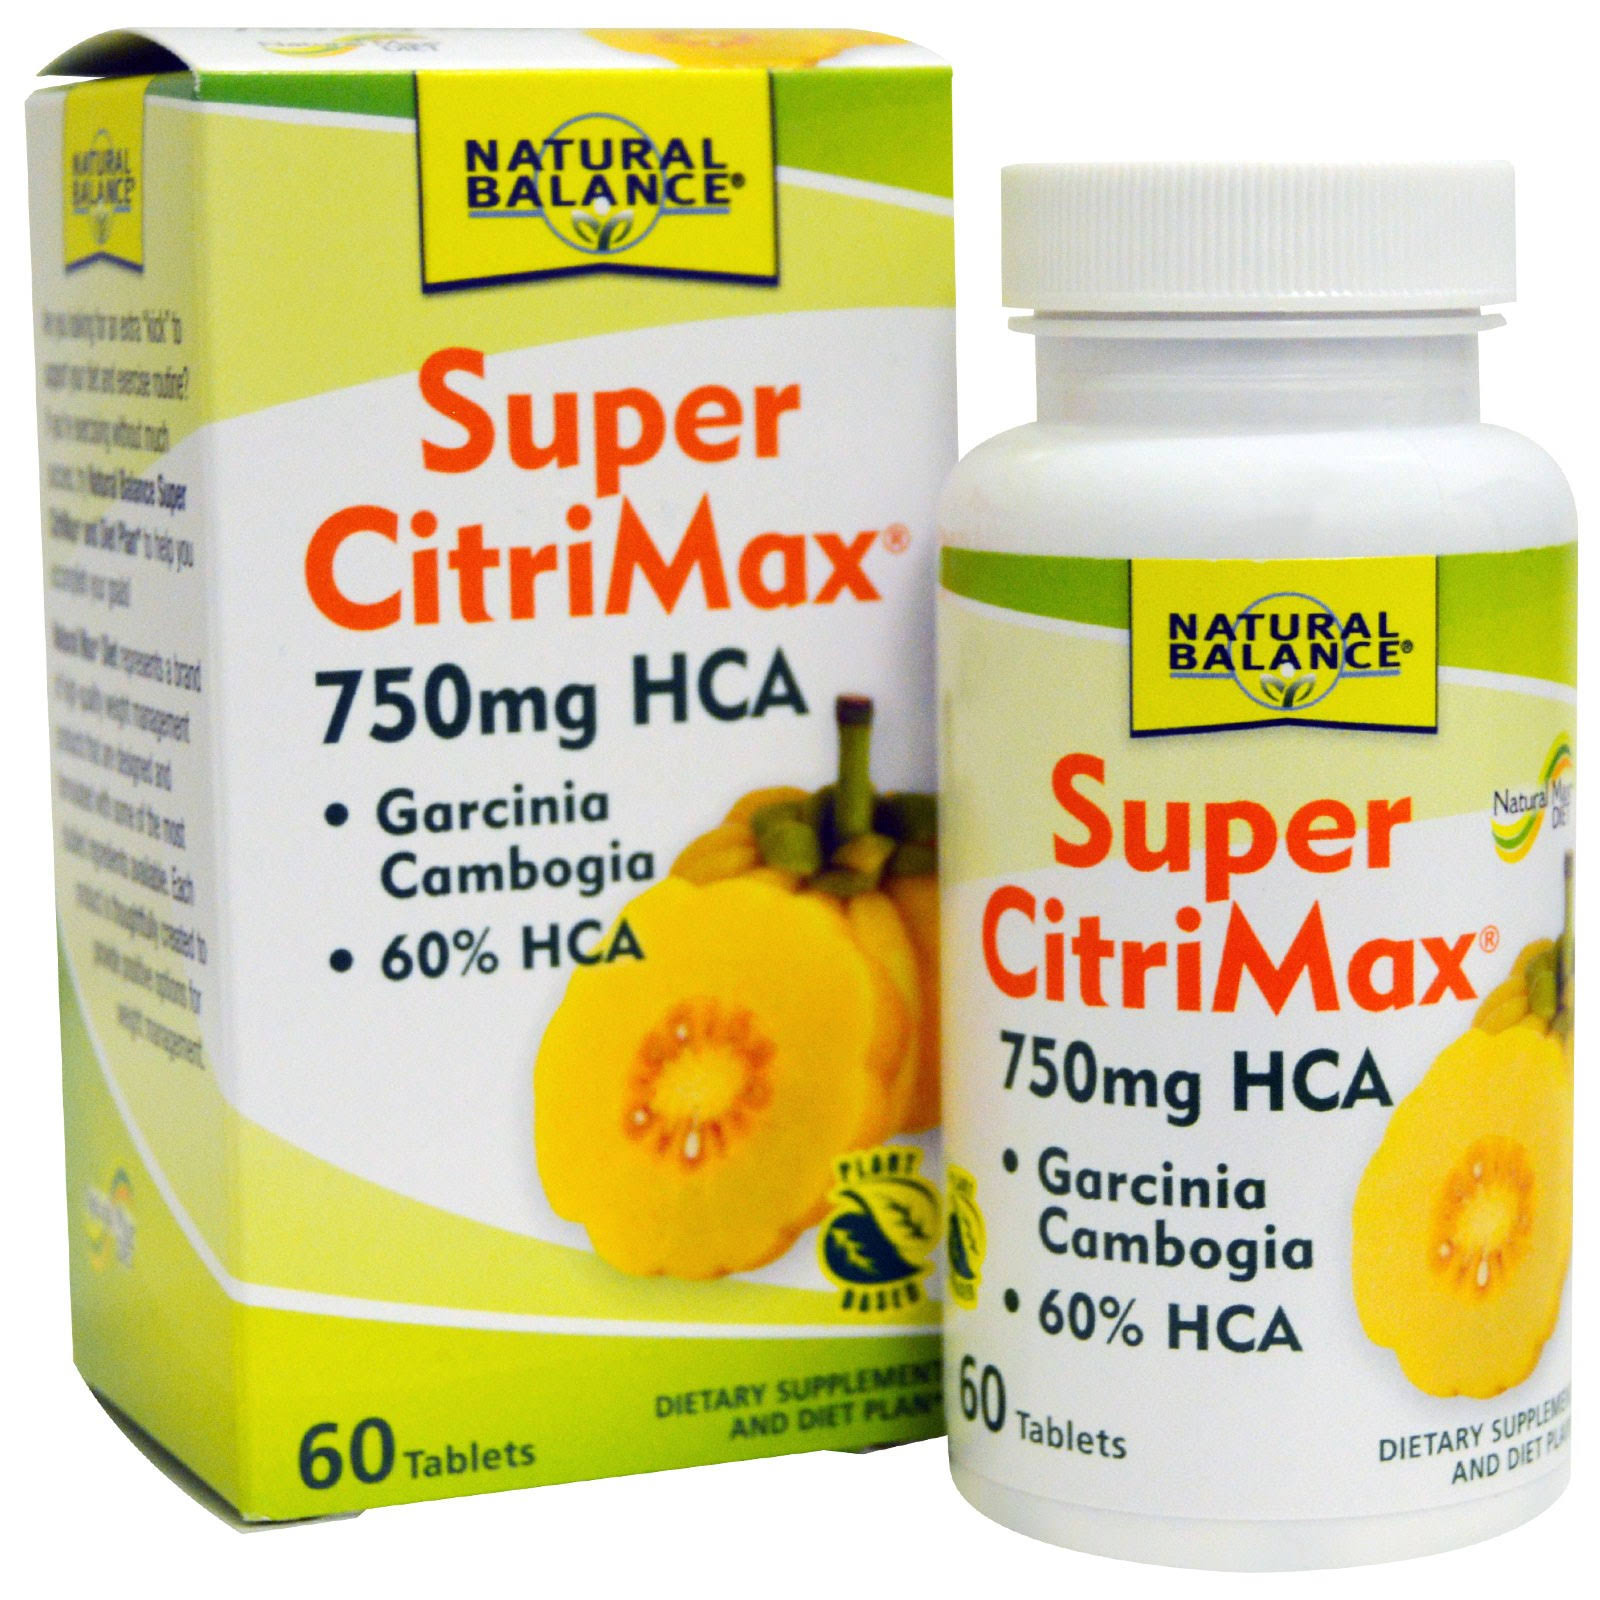 Natural Balance Super CitriMax - 60 Tablets, 750mg